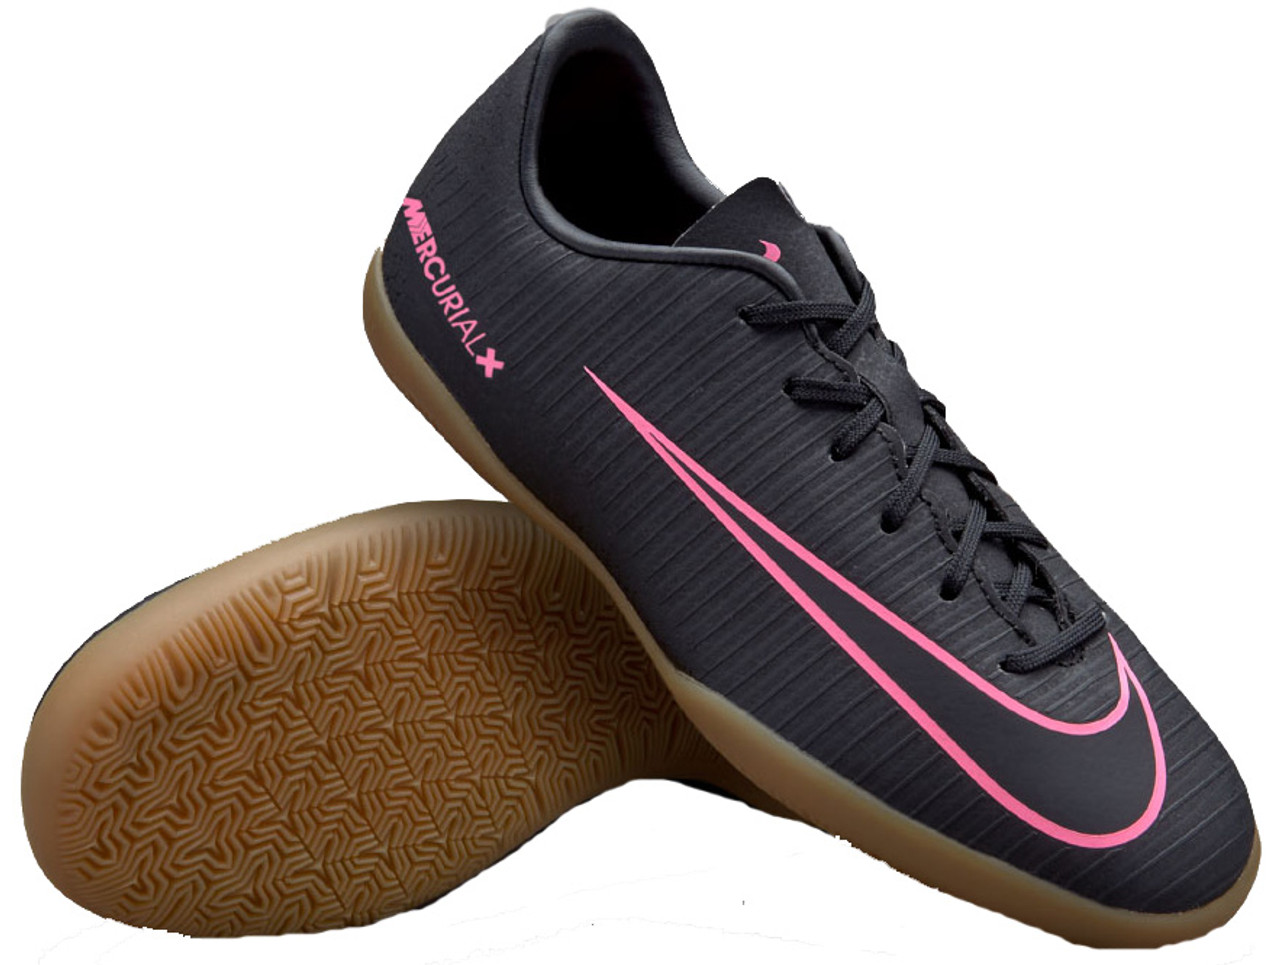 nike indoor soccer shoes pink